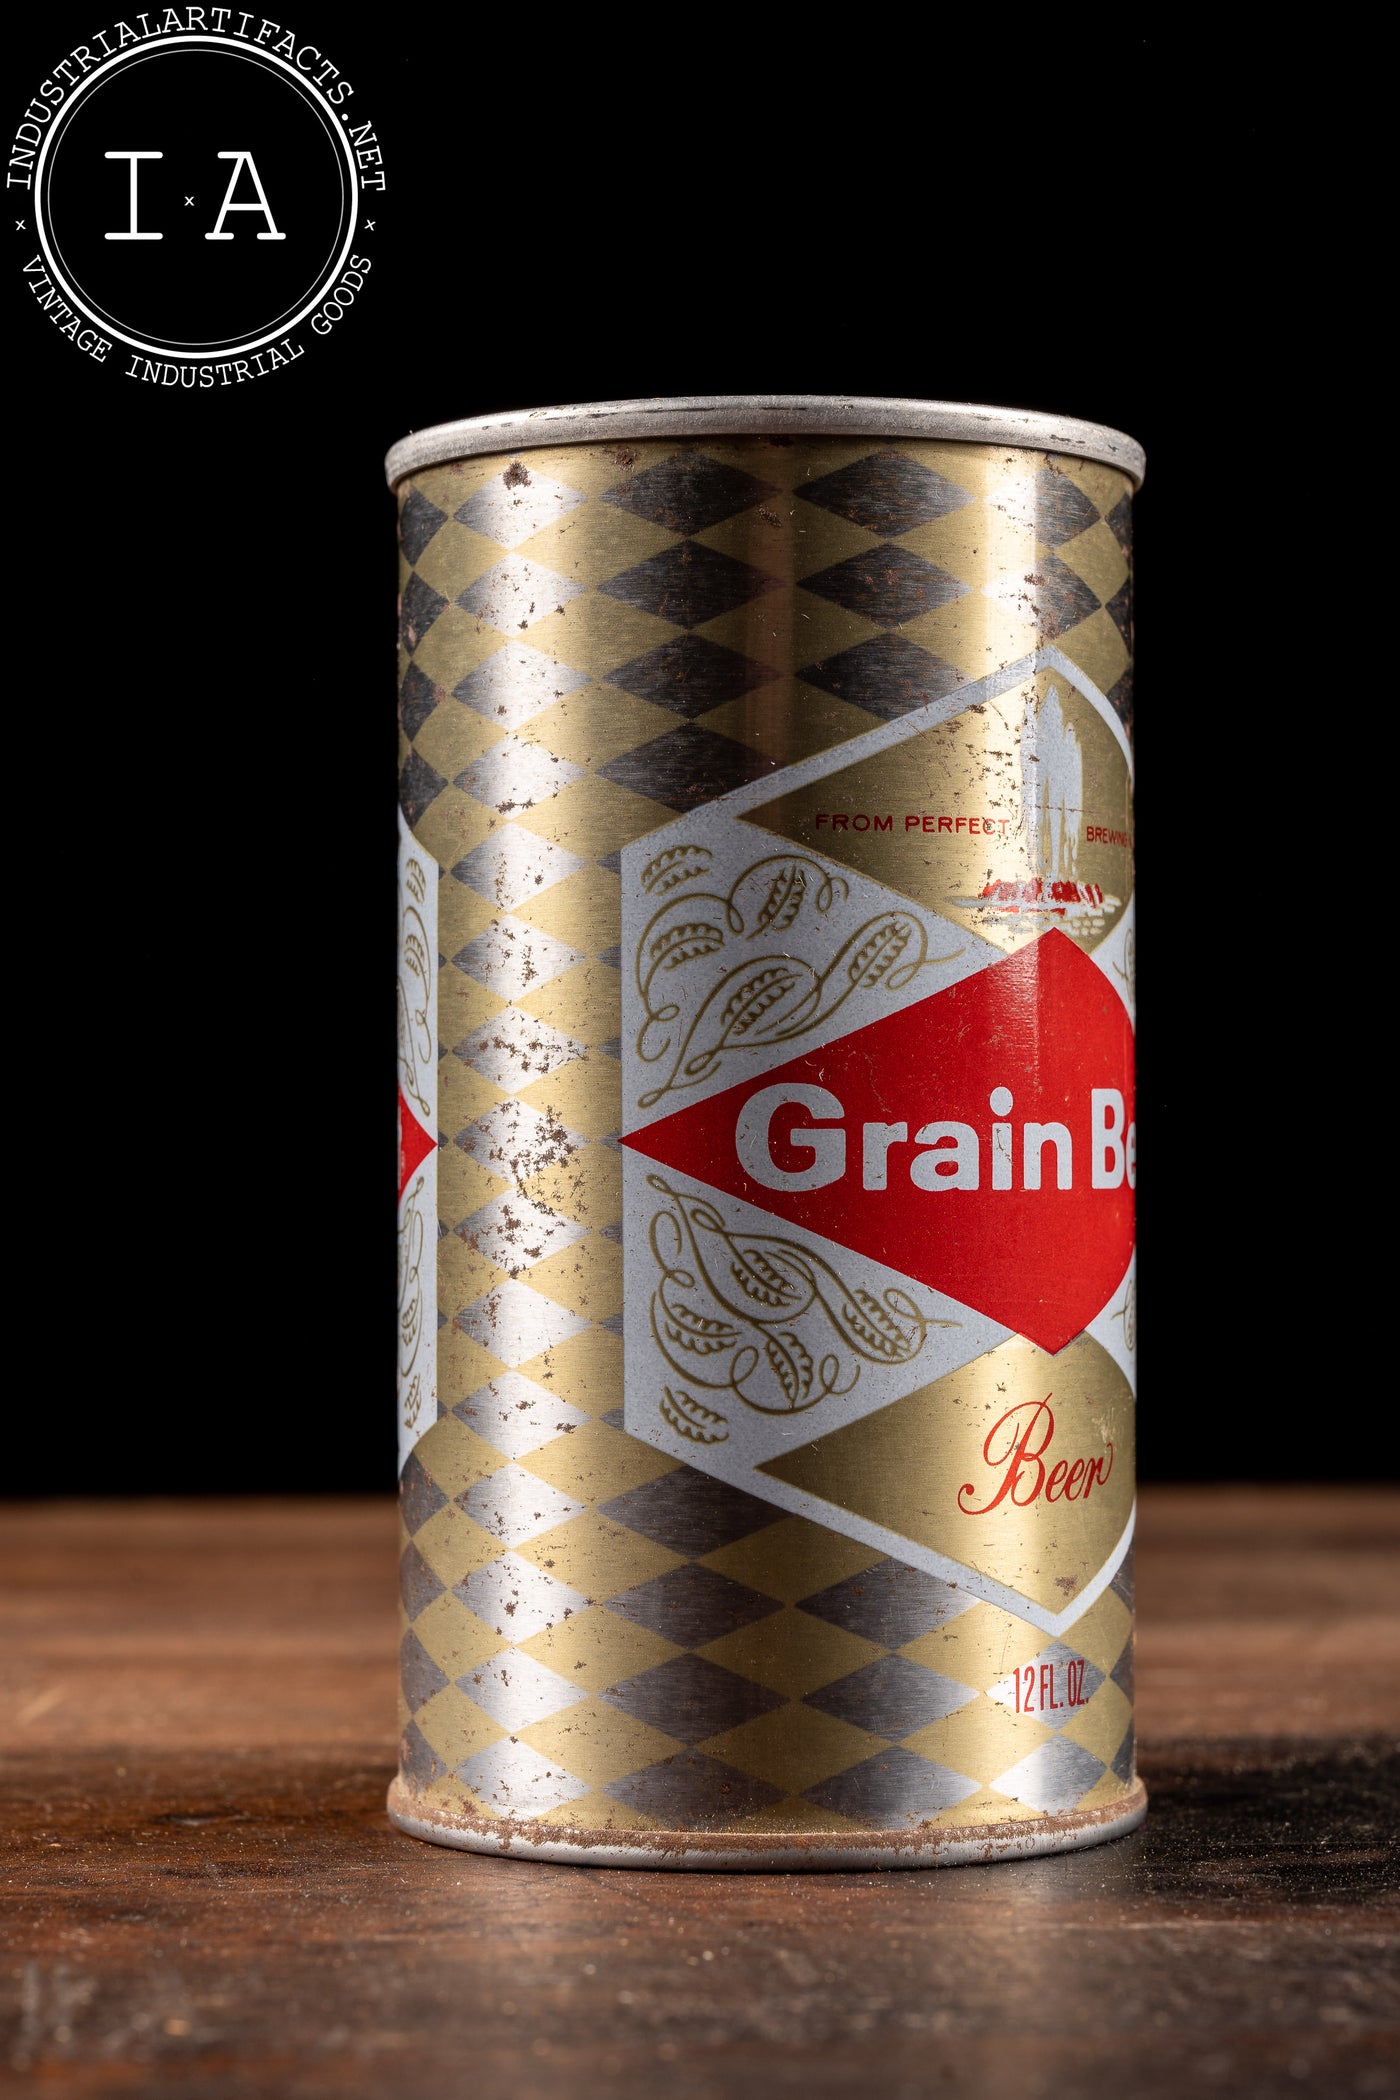 Vintage Grain Belt Beer Can